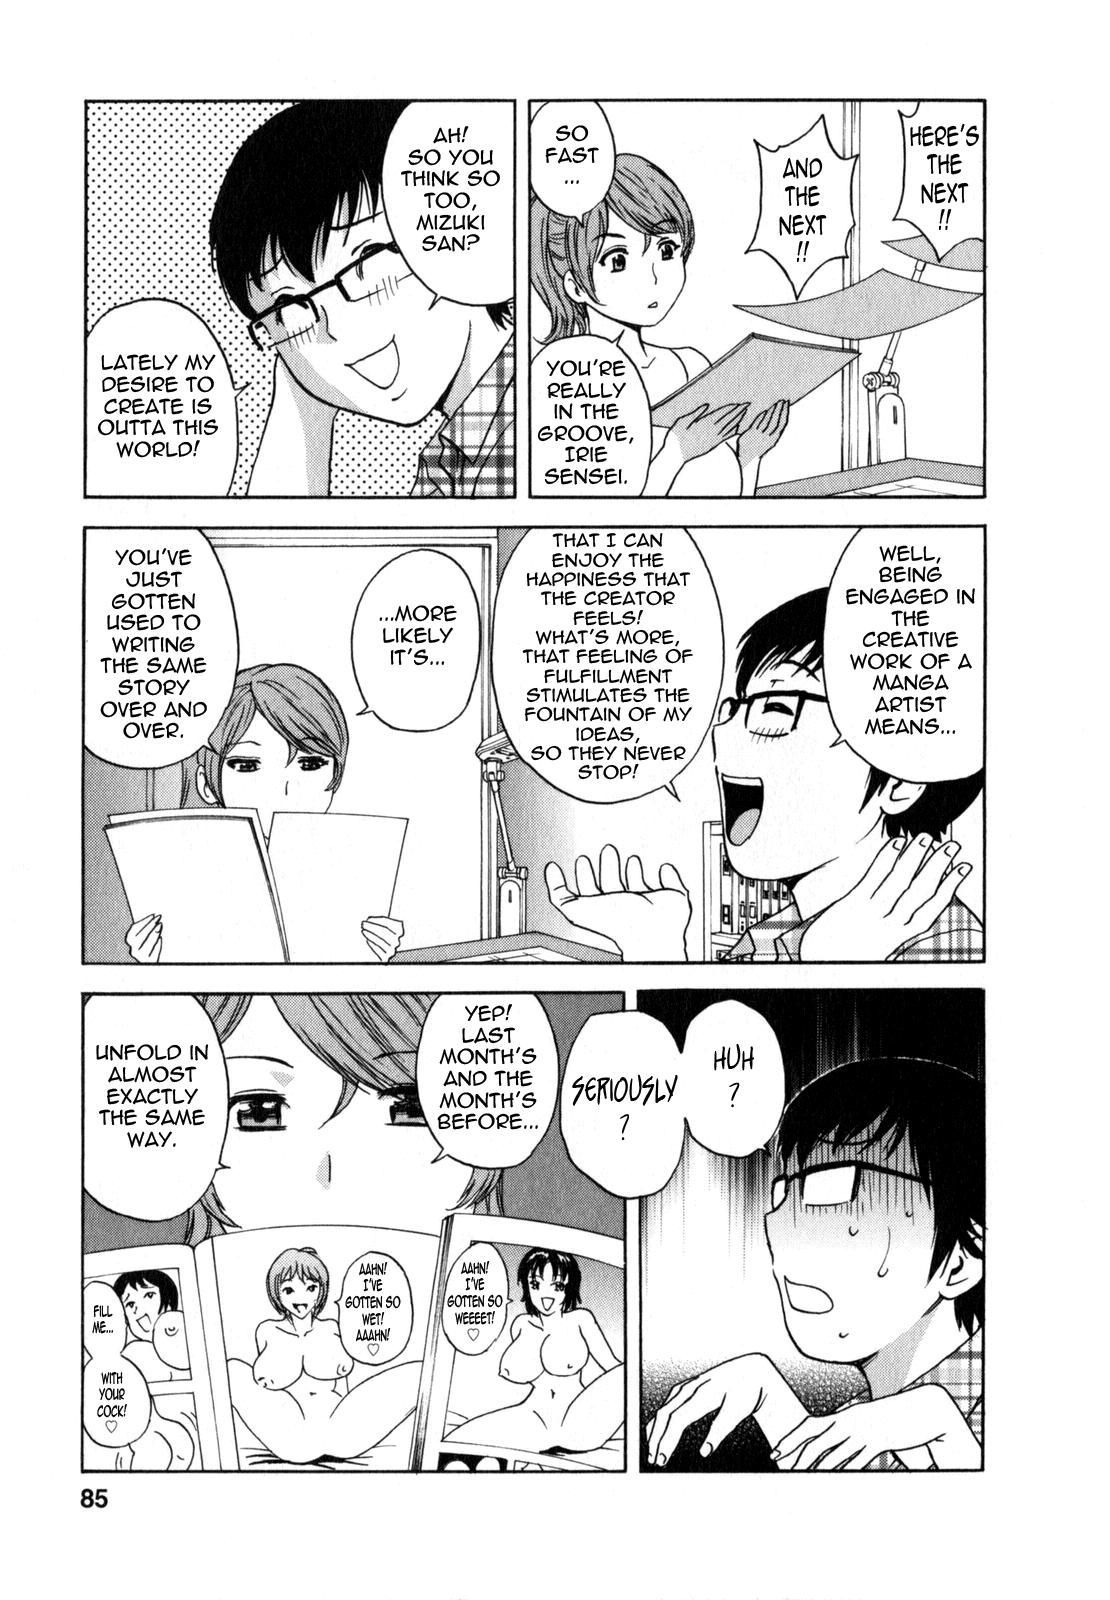 [Hidemaru] Life with Married Women Just Like a Manga 2 - Ch. 1-6 [English] {Tadanohito} 88